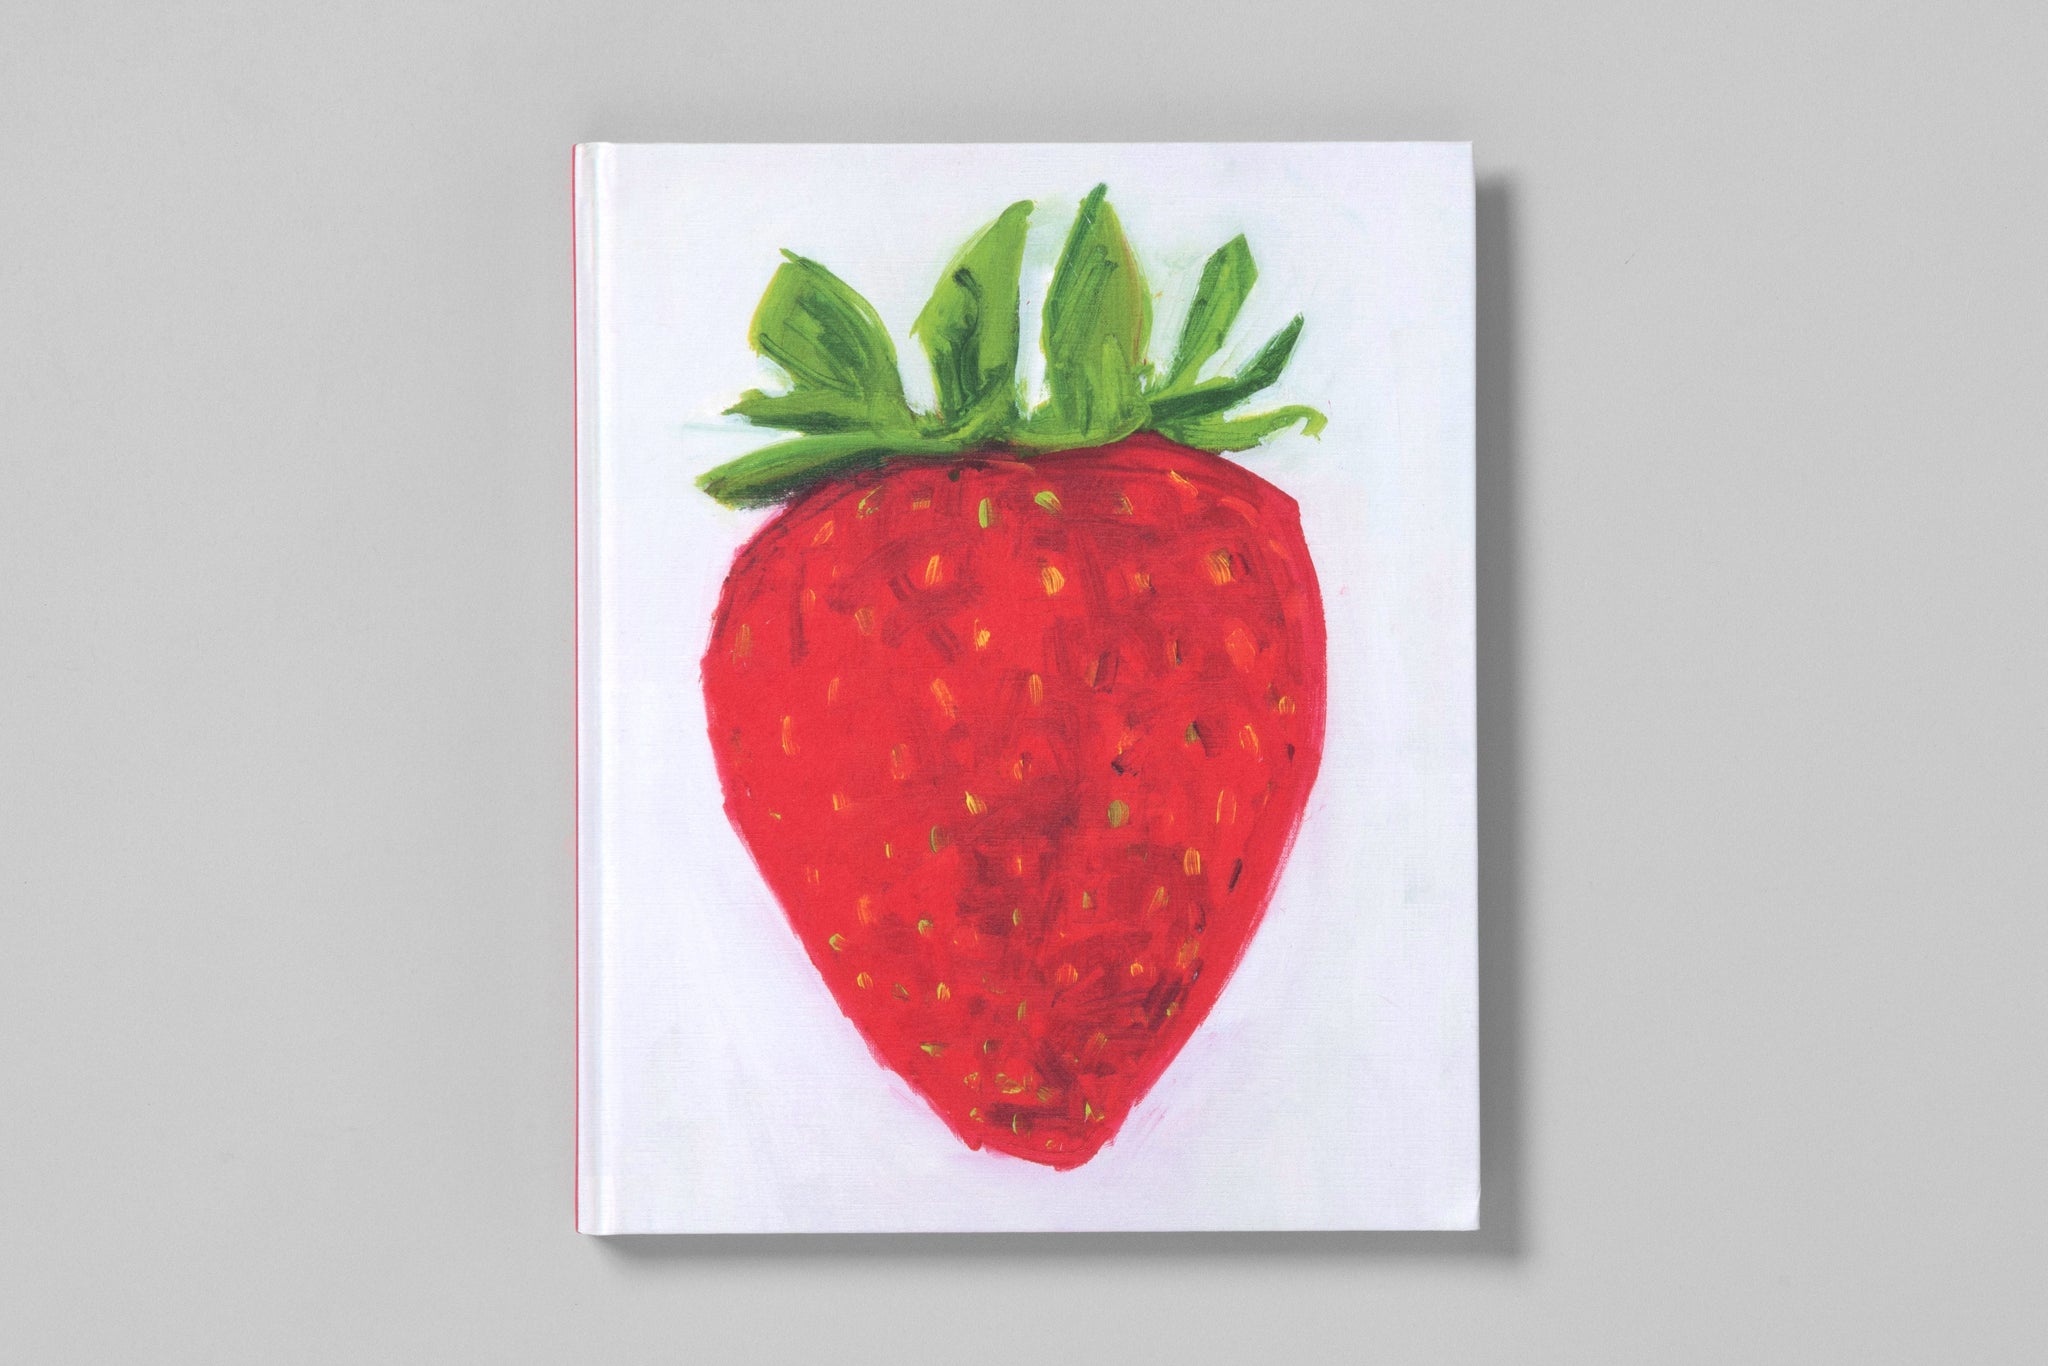 Florida Strawberries Artist Edition